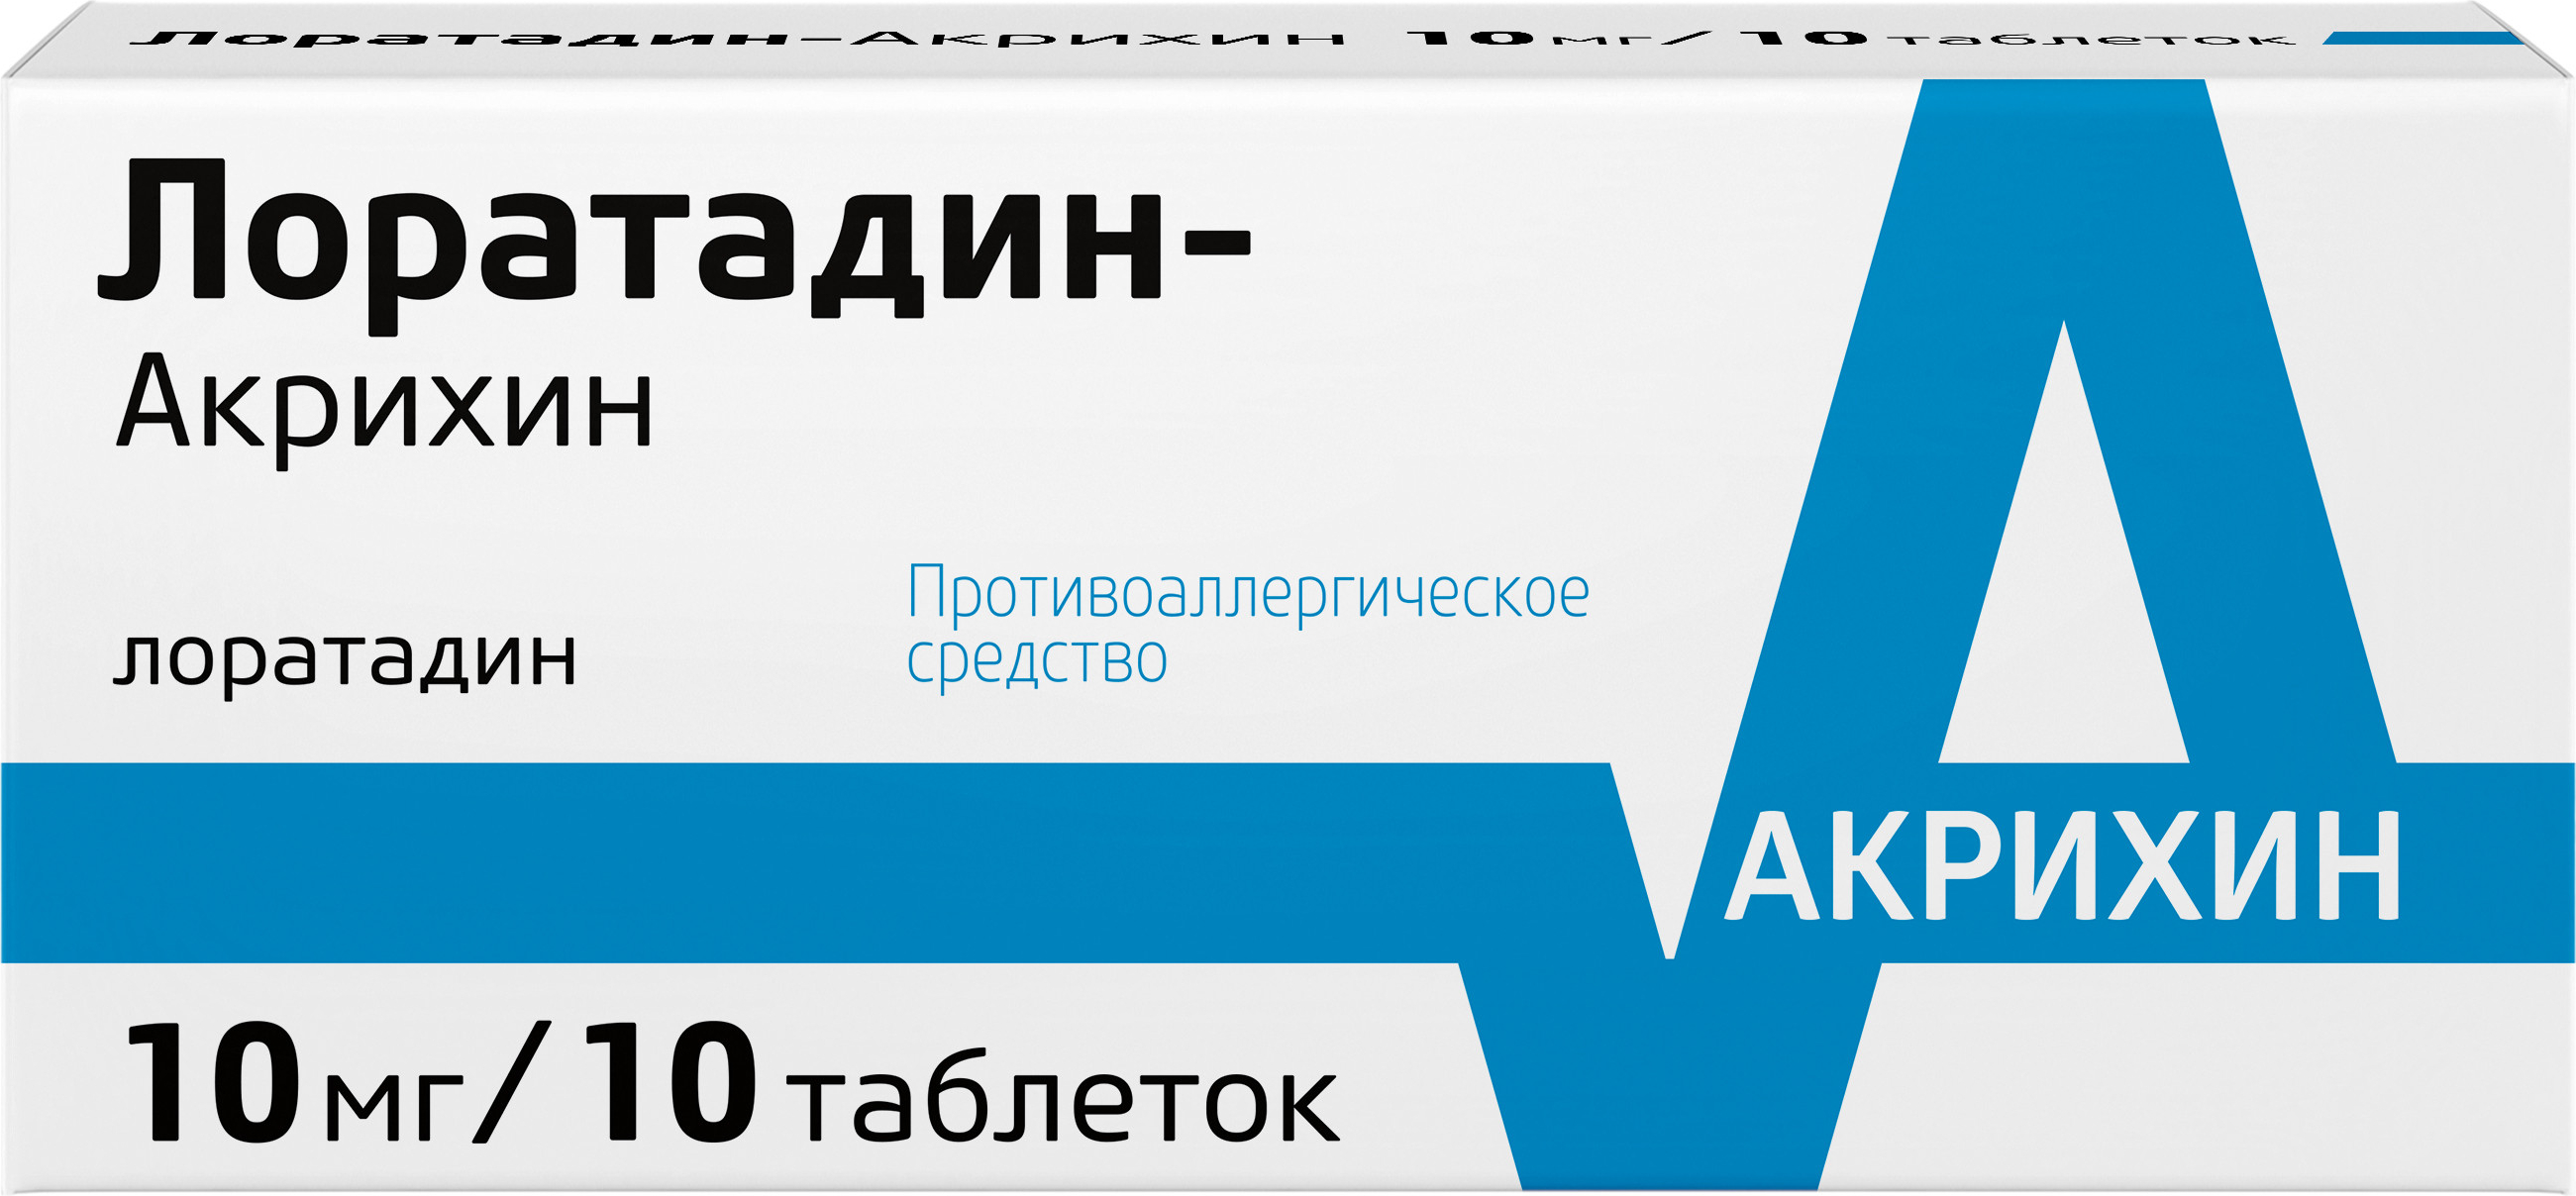 Лоратадин-Акрихин, таблетки 10 мг, 10 шт. лоратадин таблетки 10 мг 10 шт